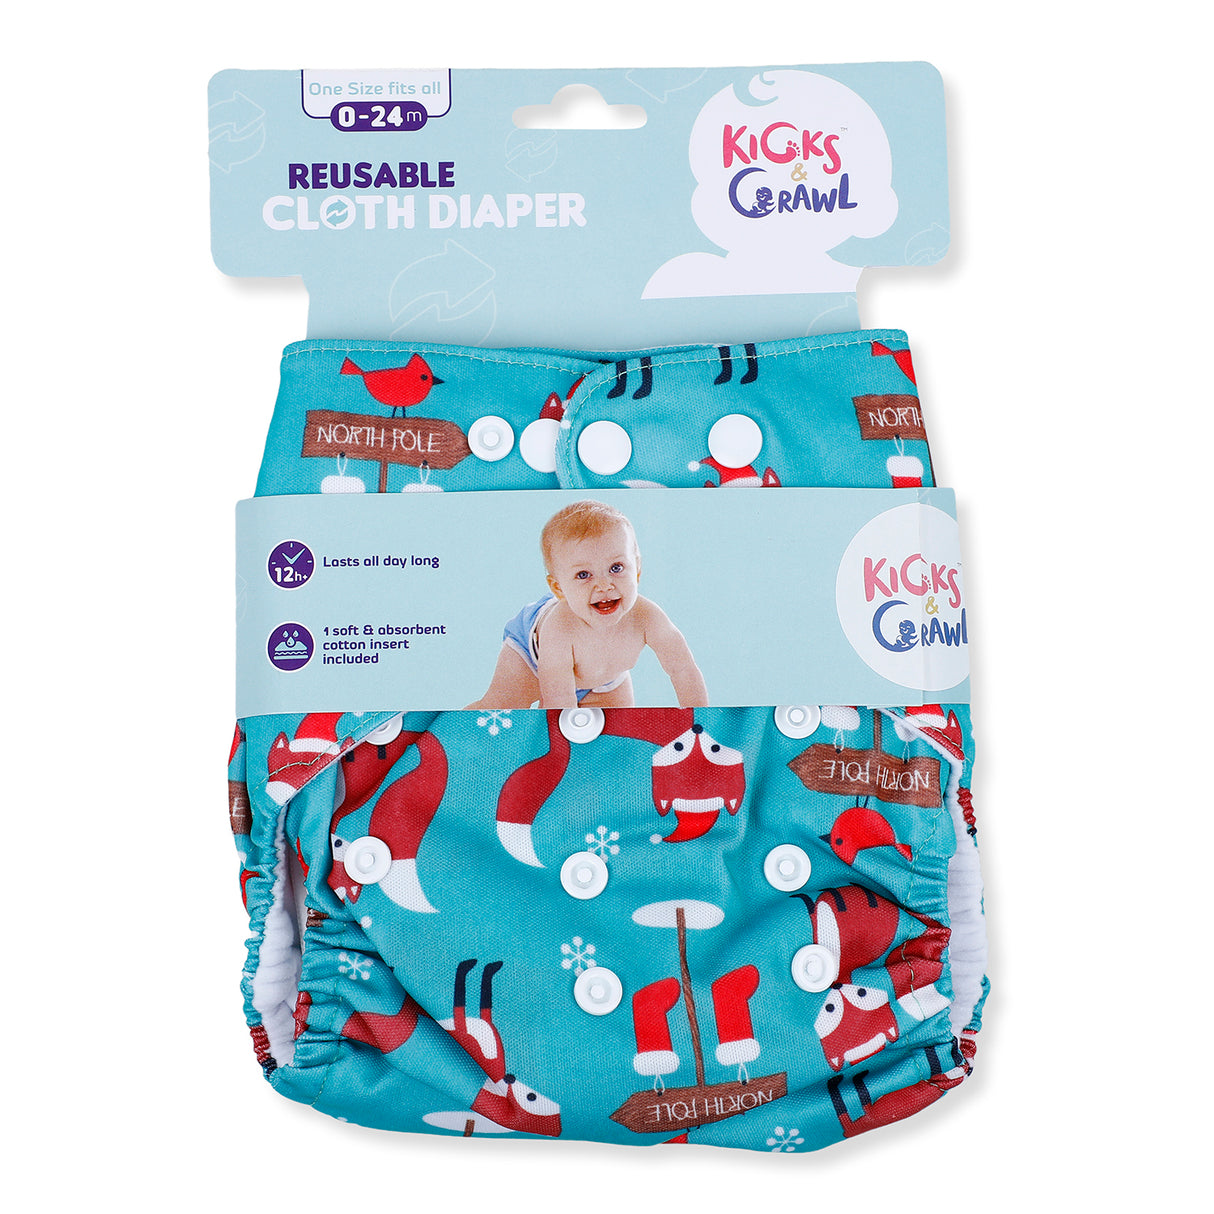 Kicks & Crawl Reusable Absorbent Soft Cloth Diaper